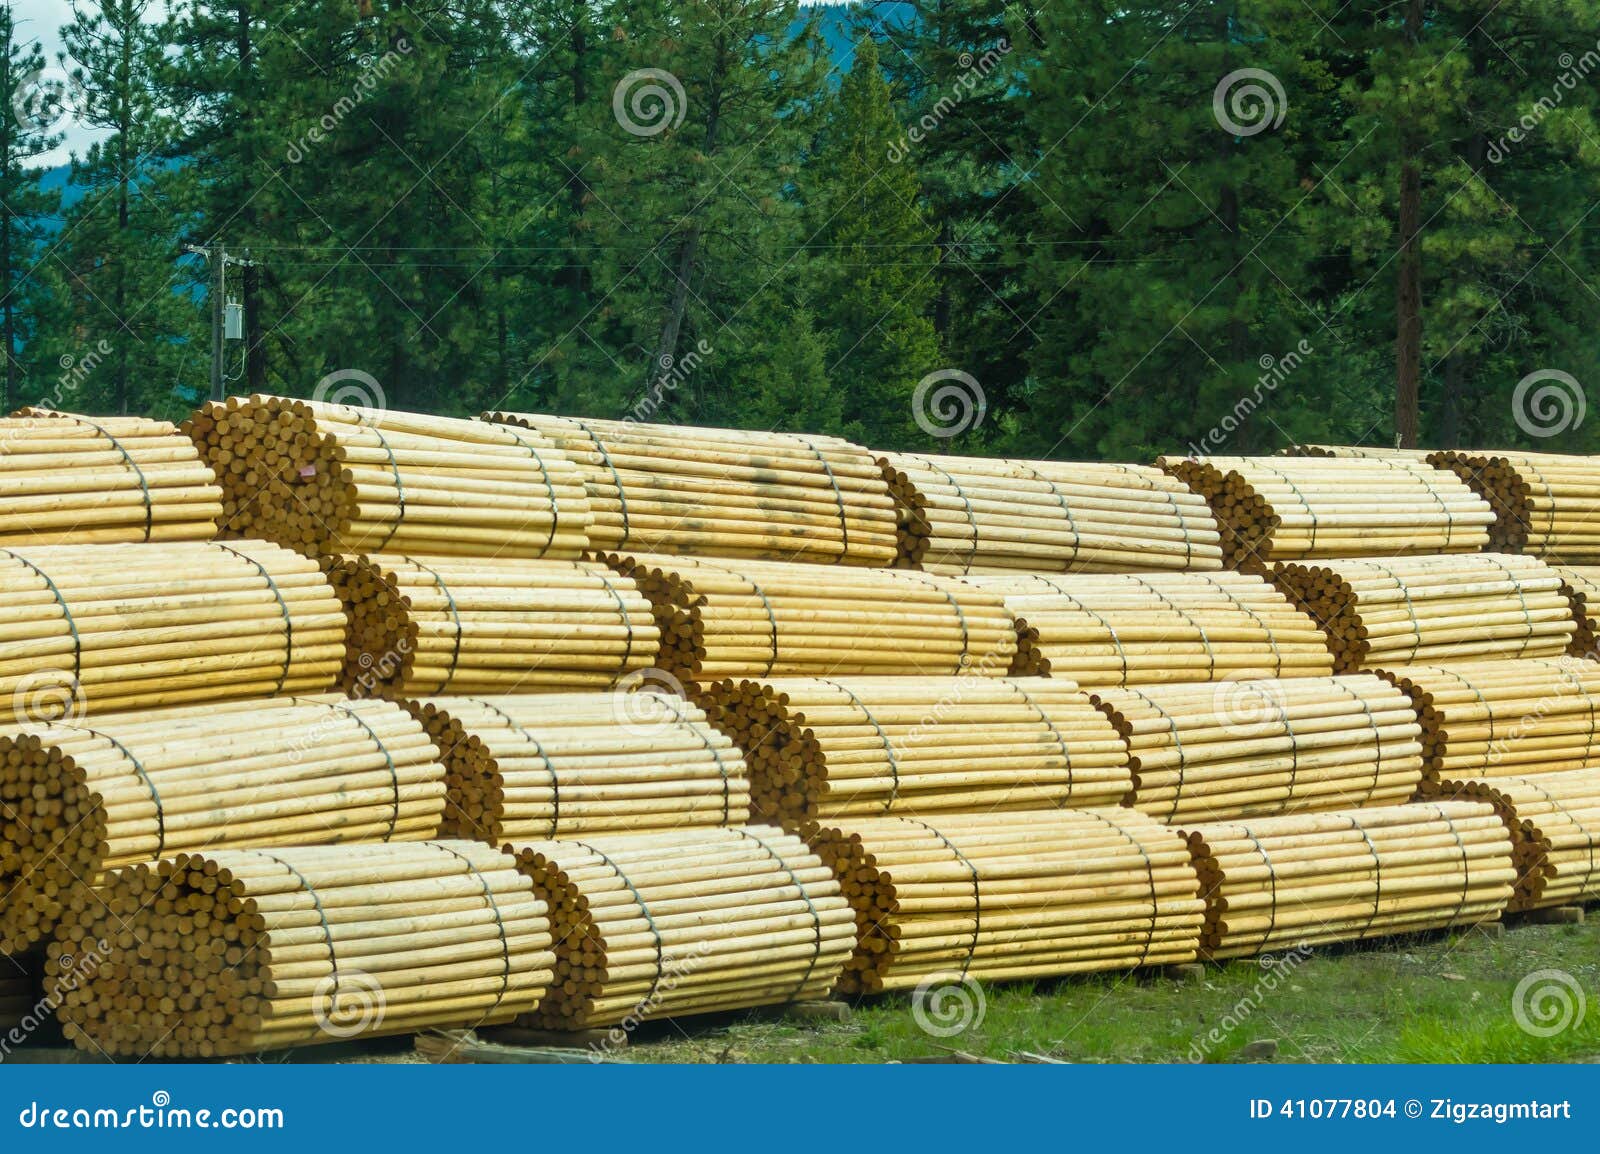 stacks-fence-posts-lumber-mill-stacked-bundles-41077804.jpg